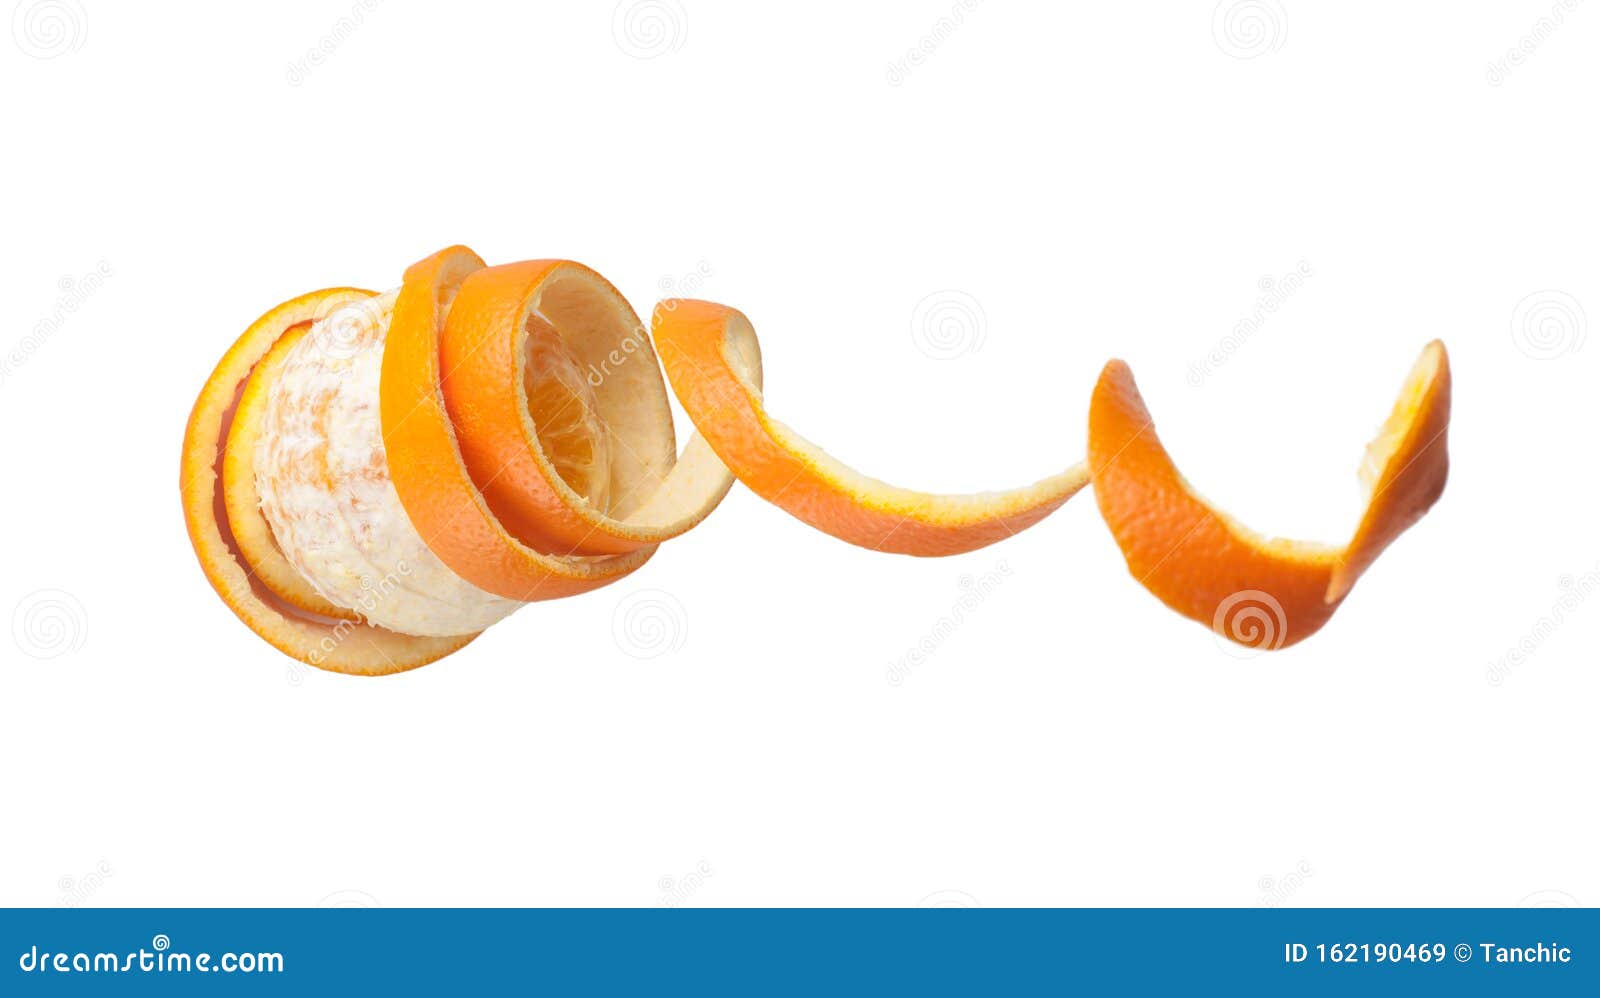 Spiral Orange Peel Peeled Orange Side View On A White Background